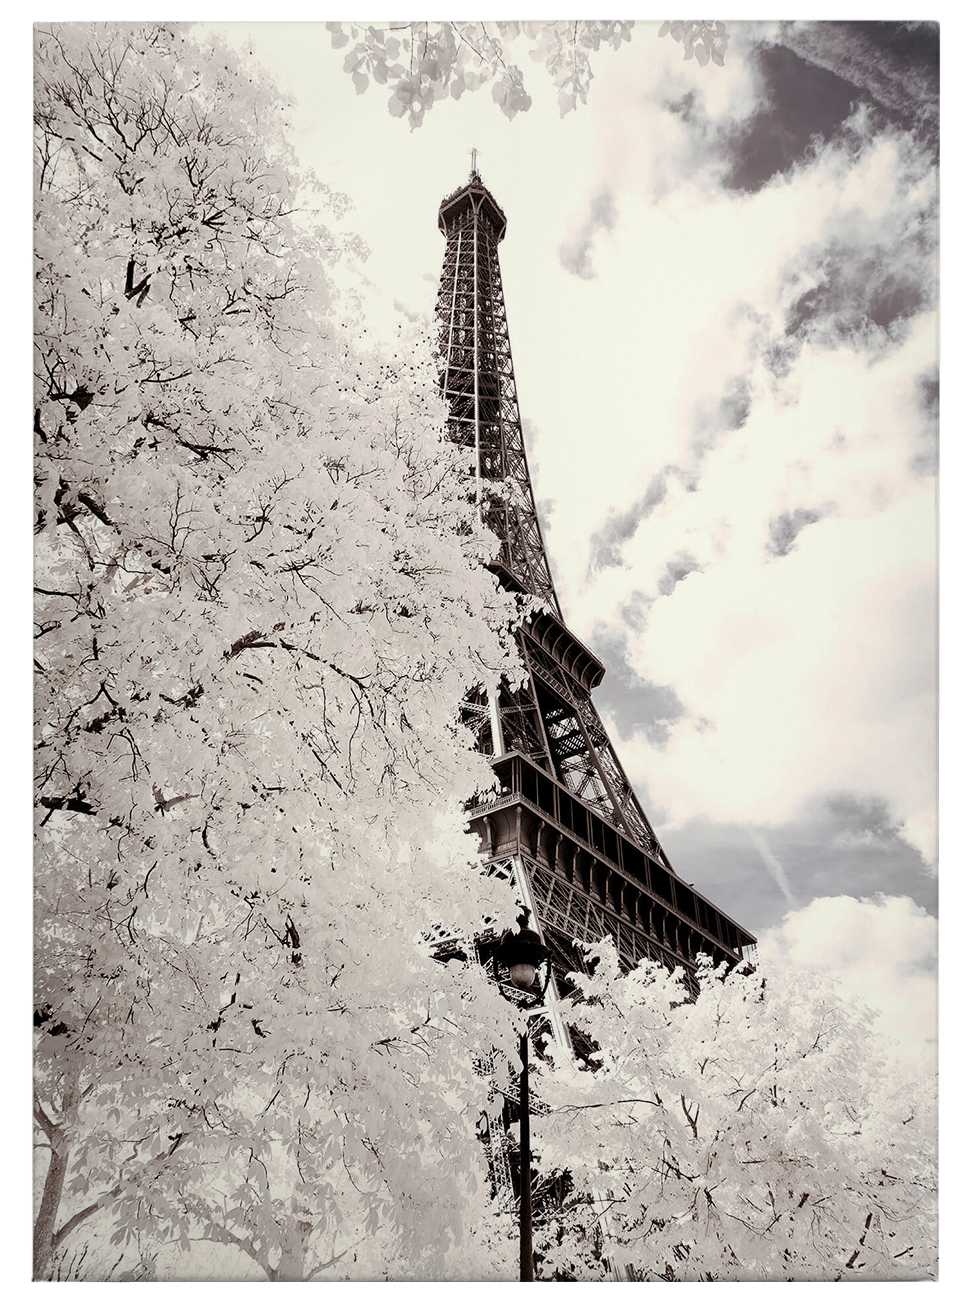             Canvas print Eiffel Tower in spring, photo by Hugonnard
        